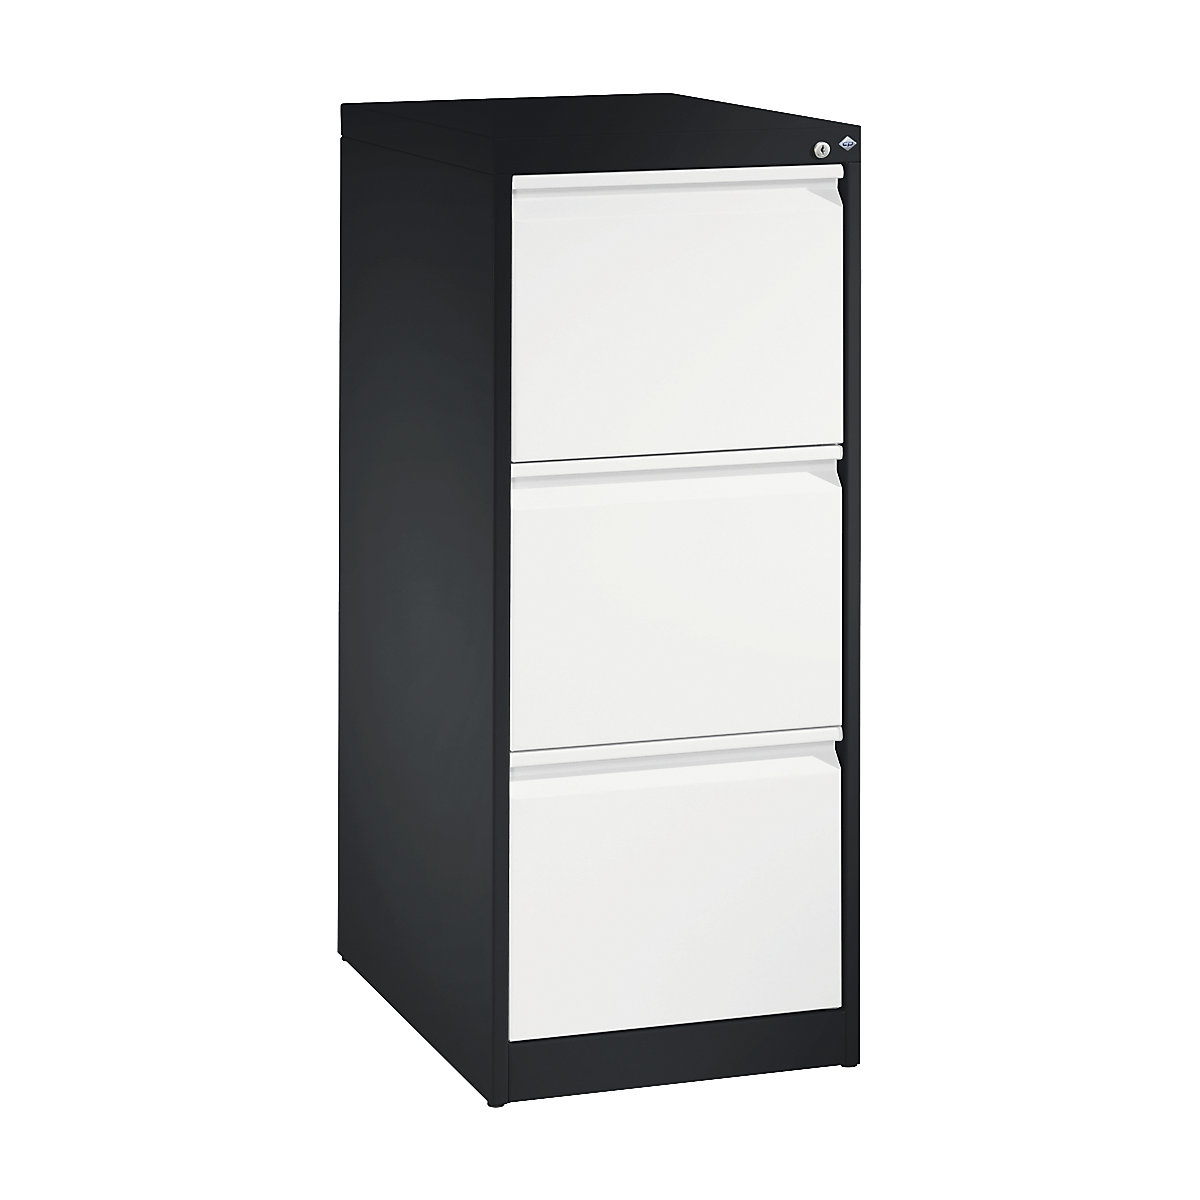 C+P – ACURADO suspension filing cabinet, 1 track, 3 drawers, black grey / traffic white